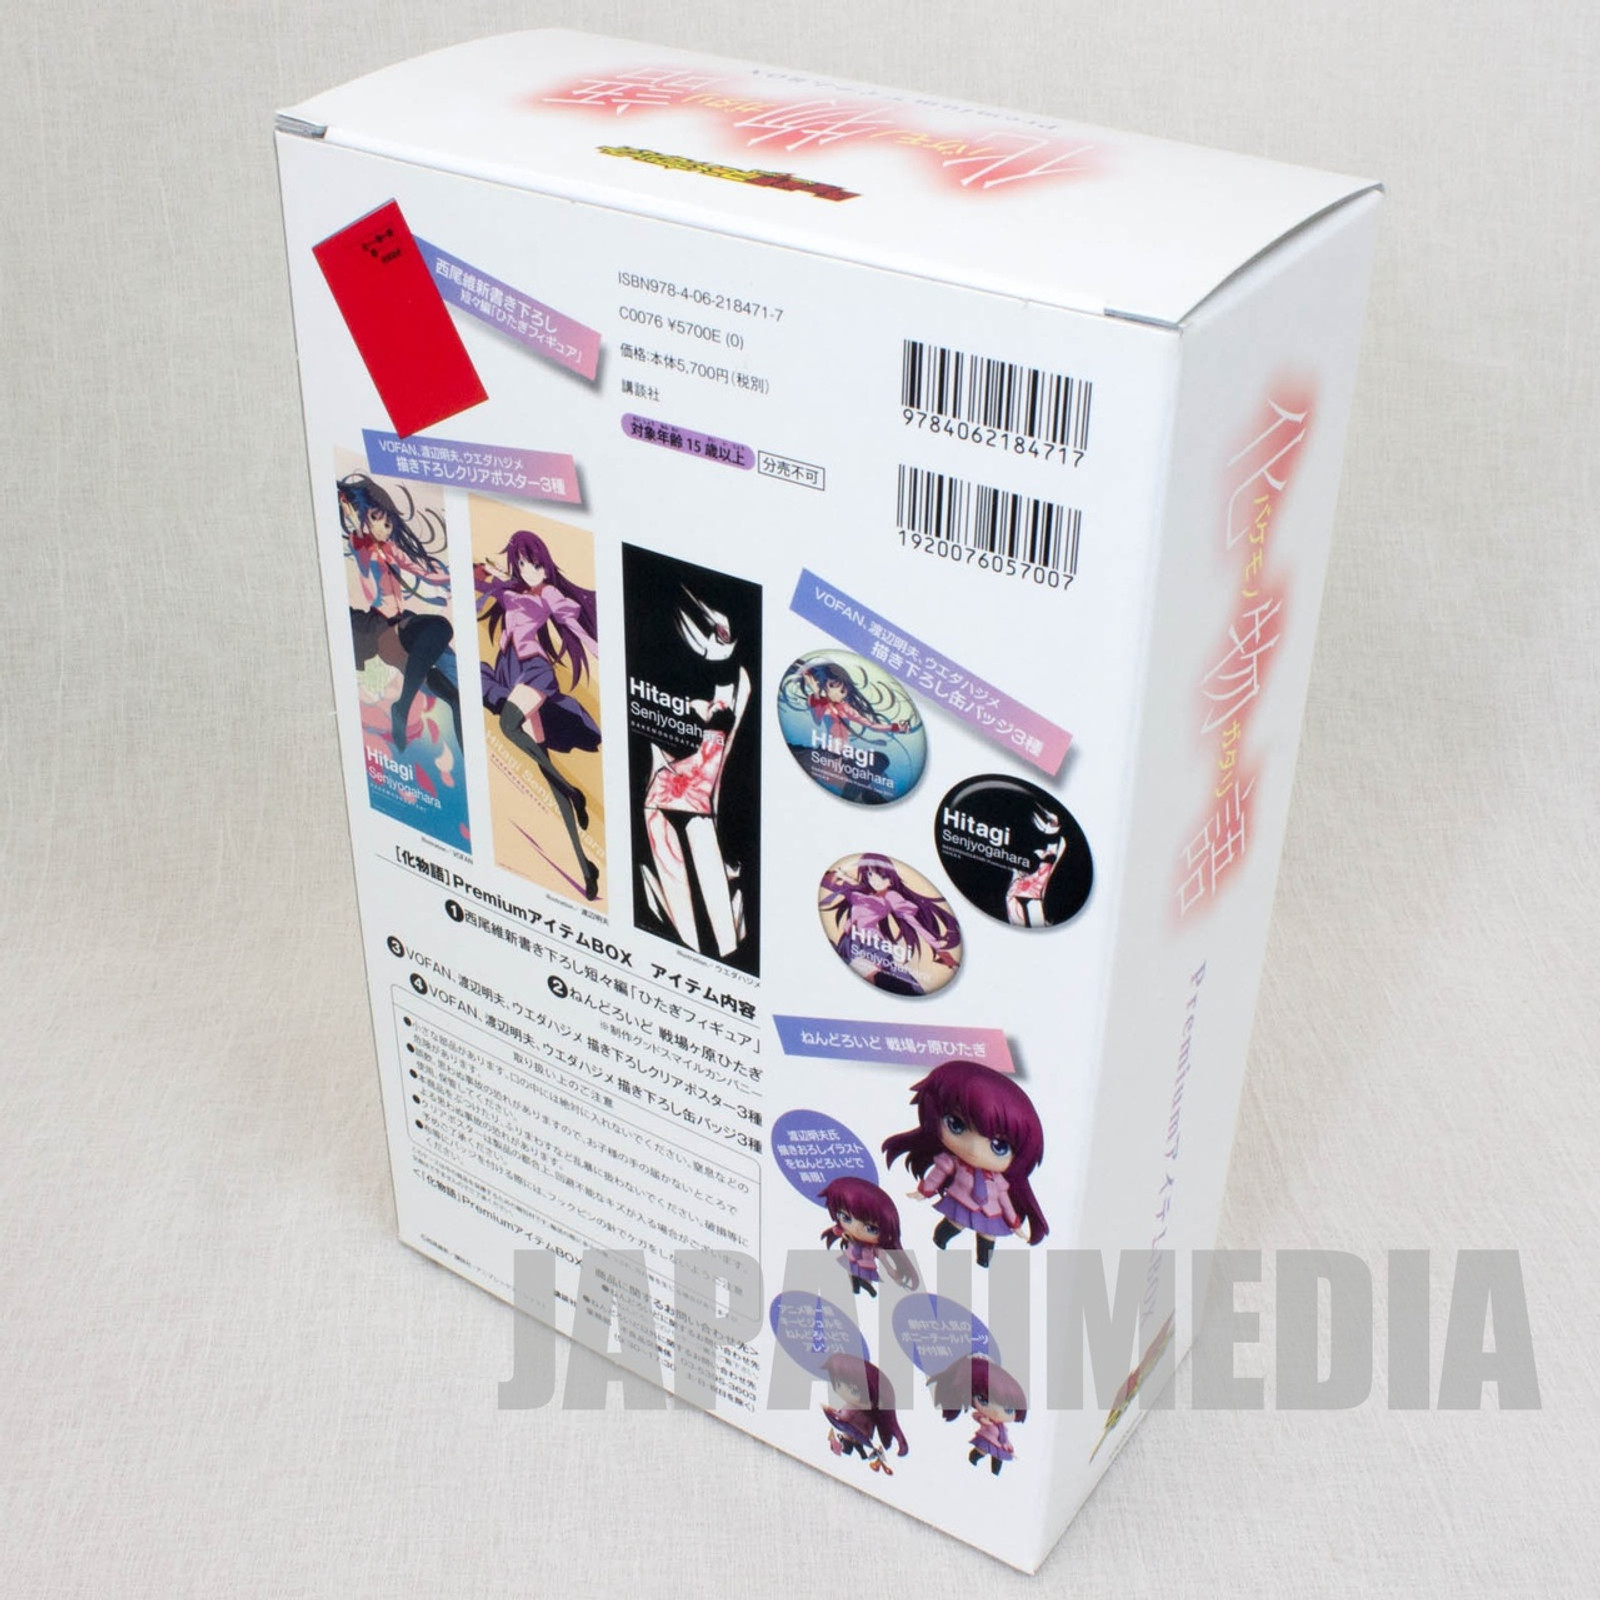 Bakemonogatari Senjogahara Hitagi Premium Box Set Nendoroid Figure JAPAN ANIME Tracking number: